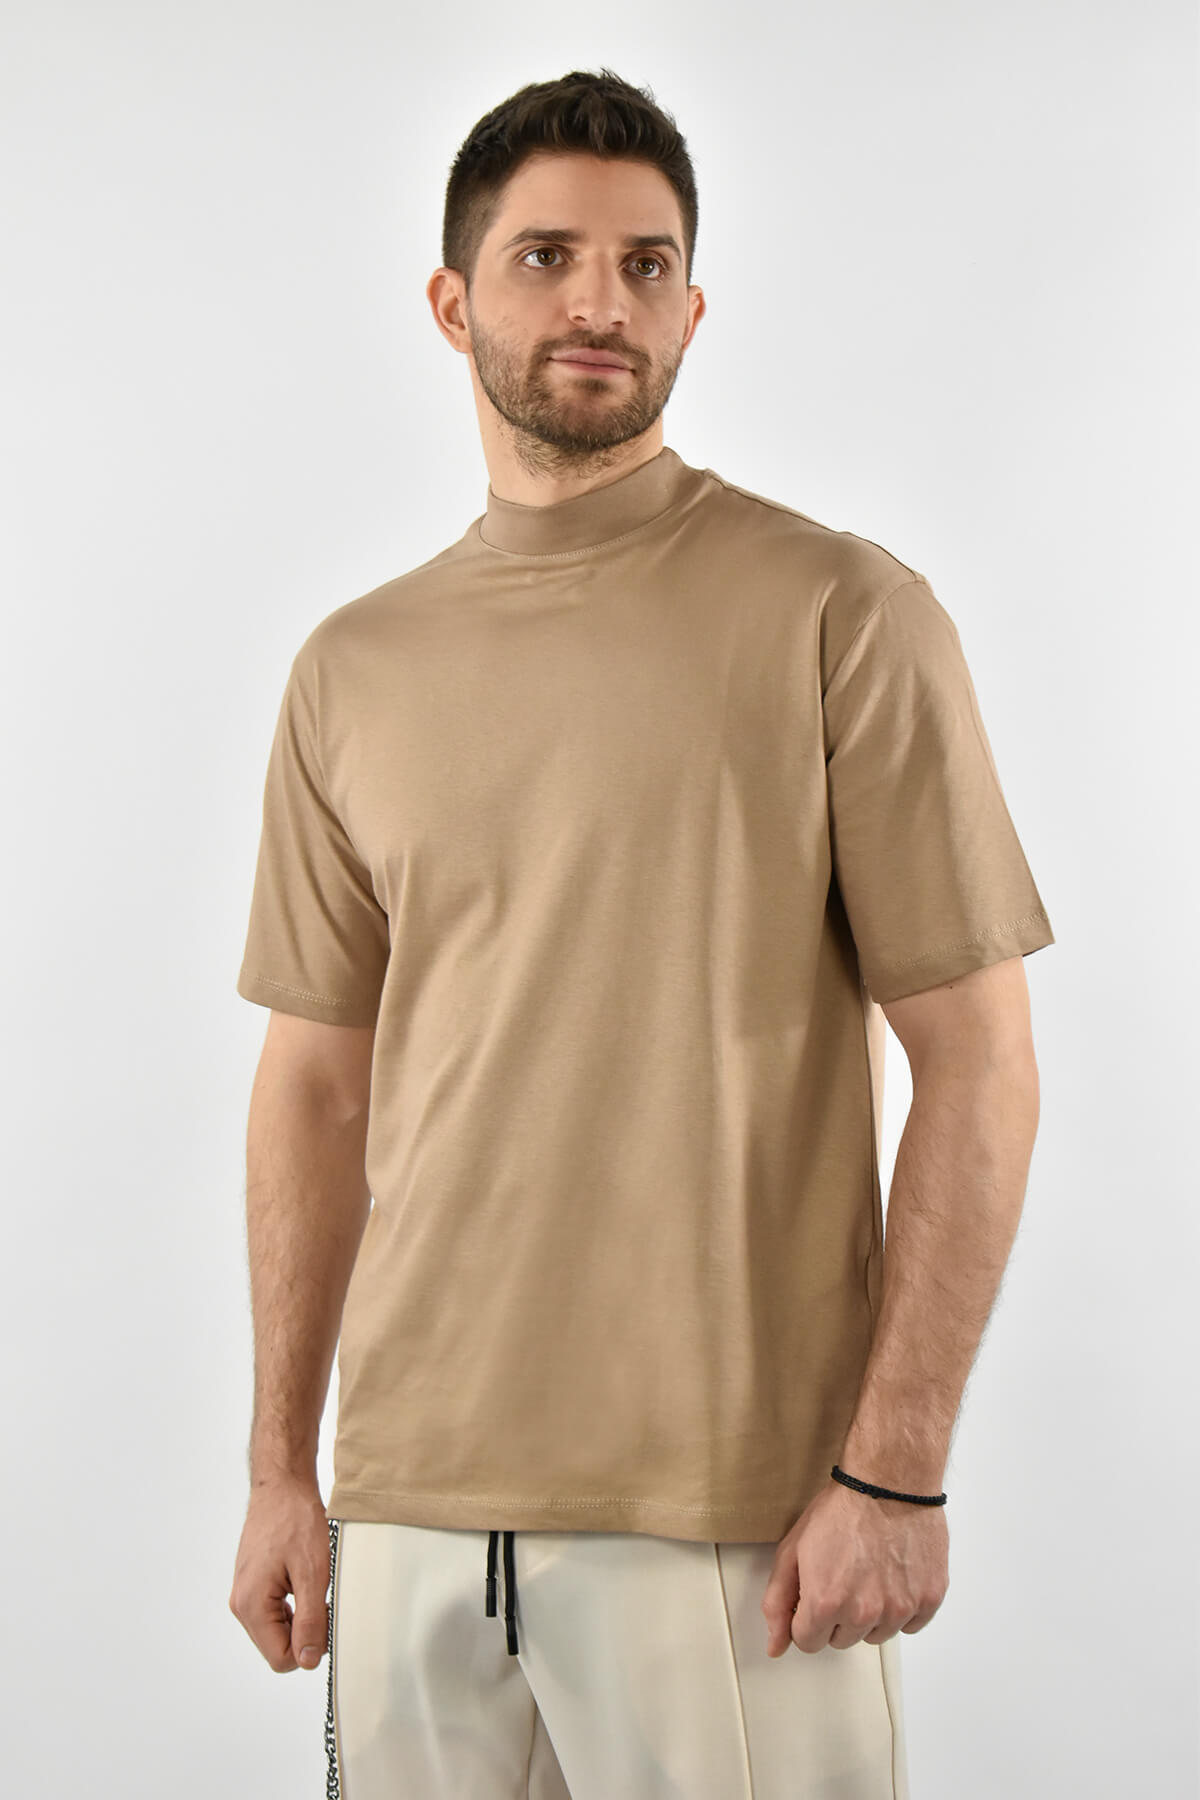 JustWest Fashion T-shirt Half Neck